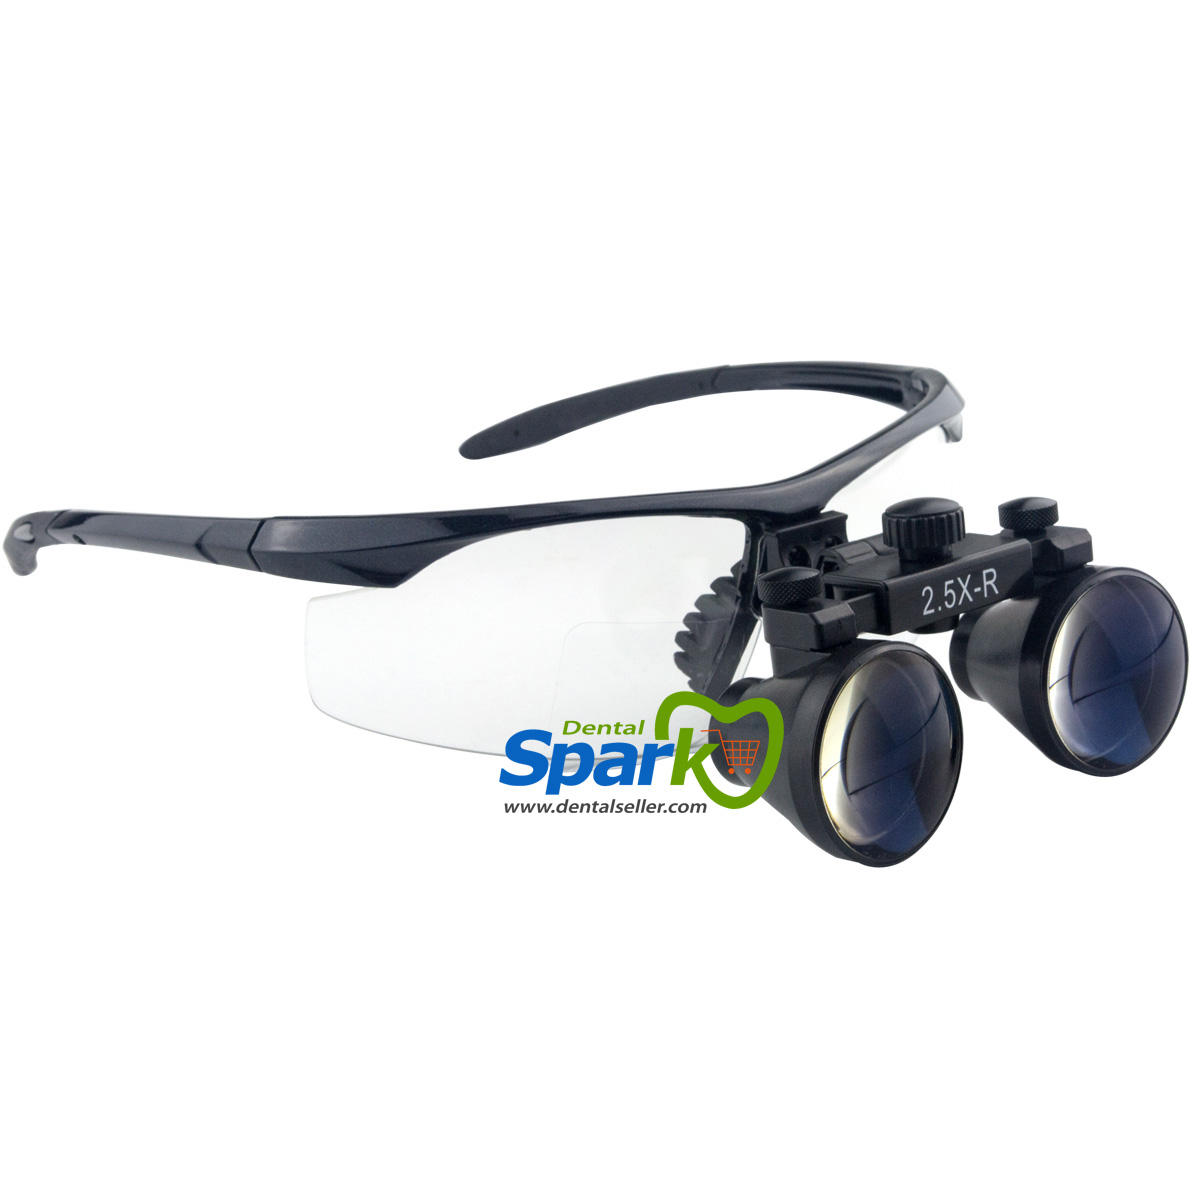 2.5 x Magnification Professional Dental Loupes by Spark Adjustable Pupil Distance Model #CM250